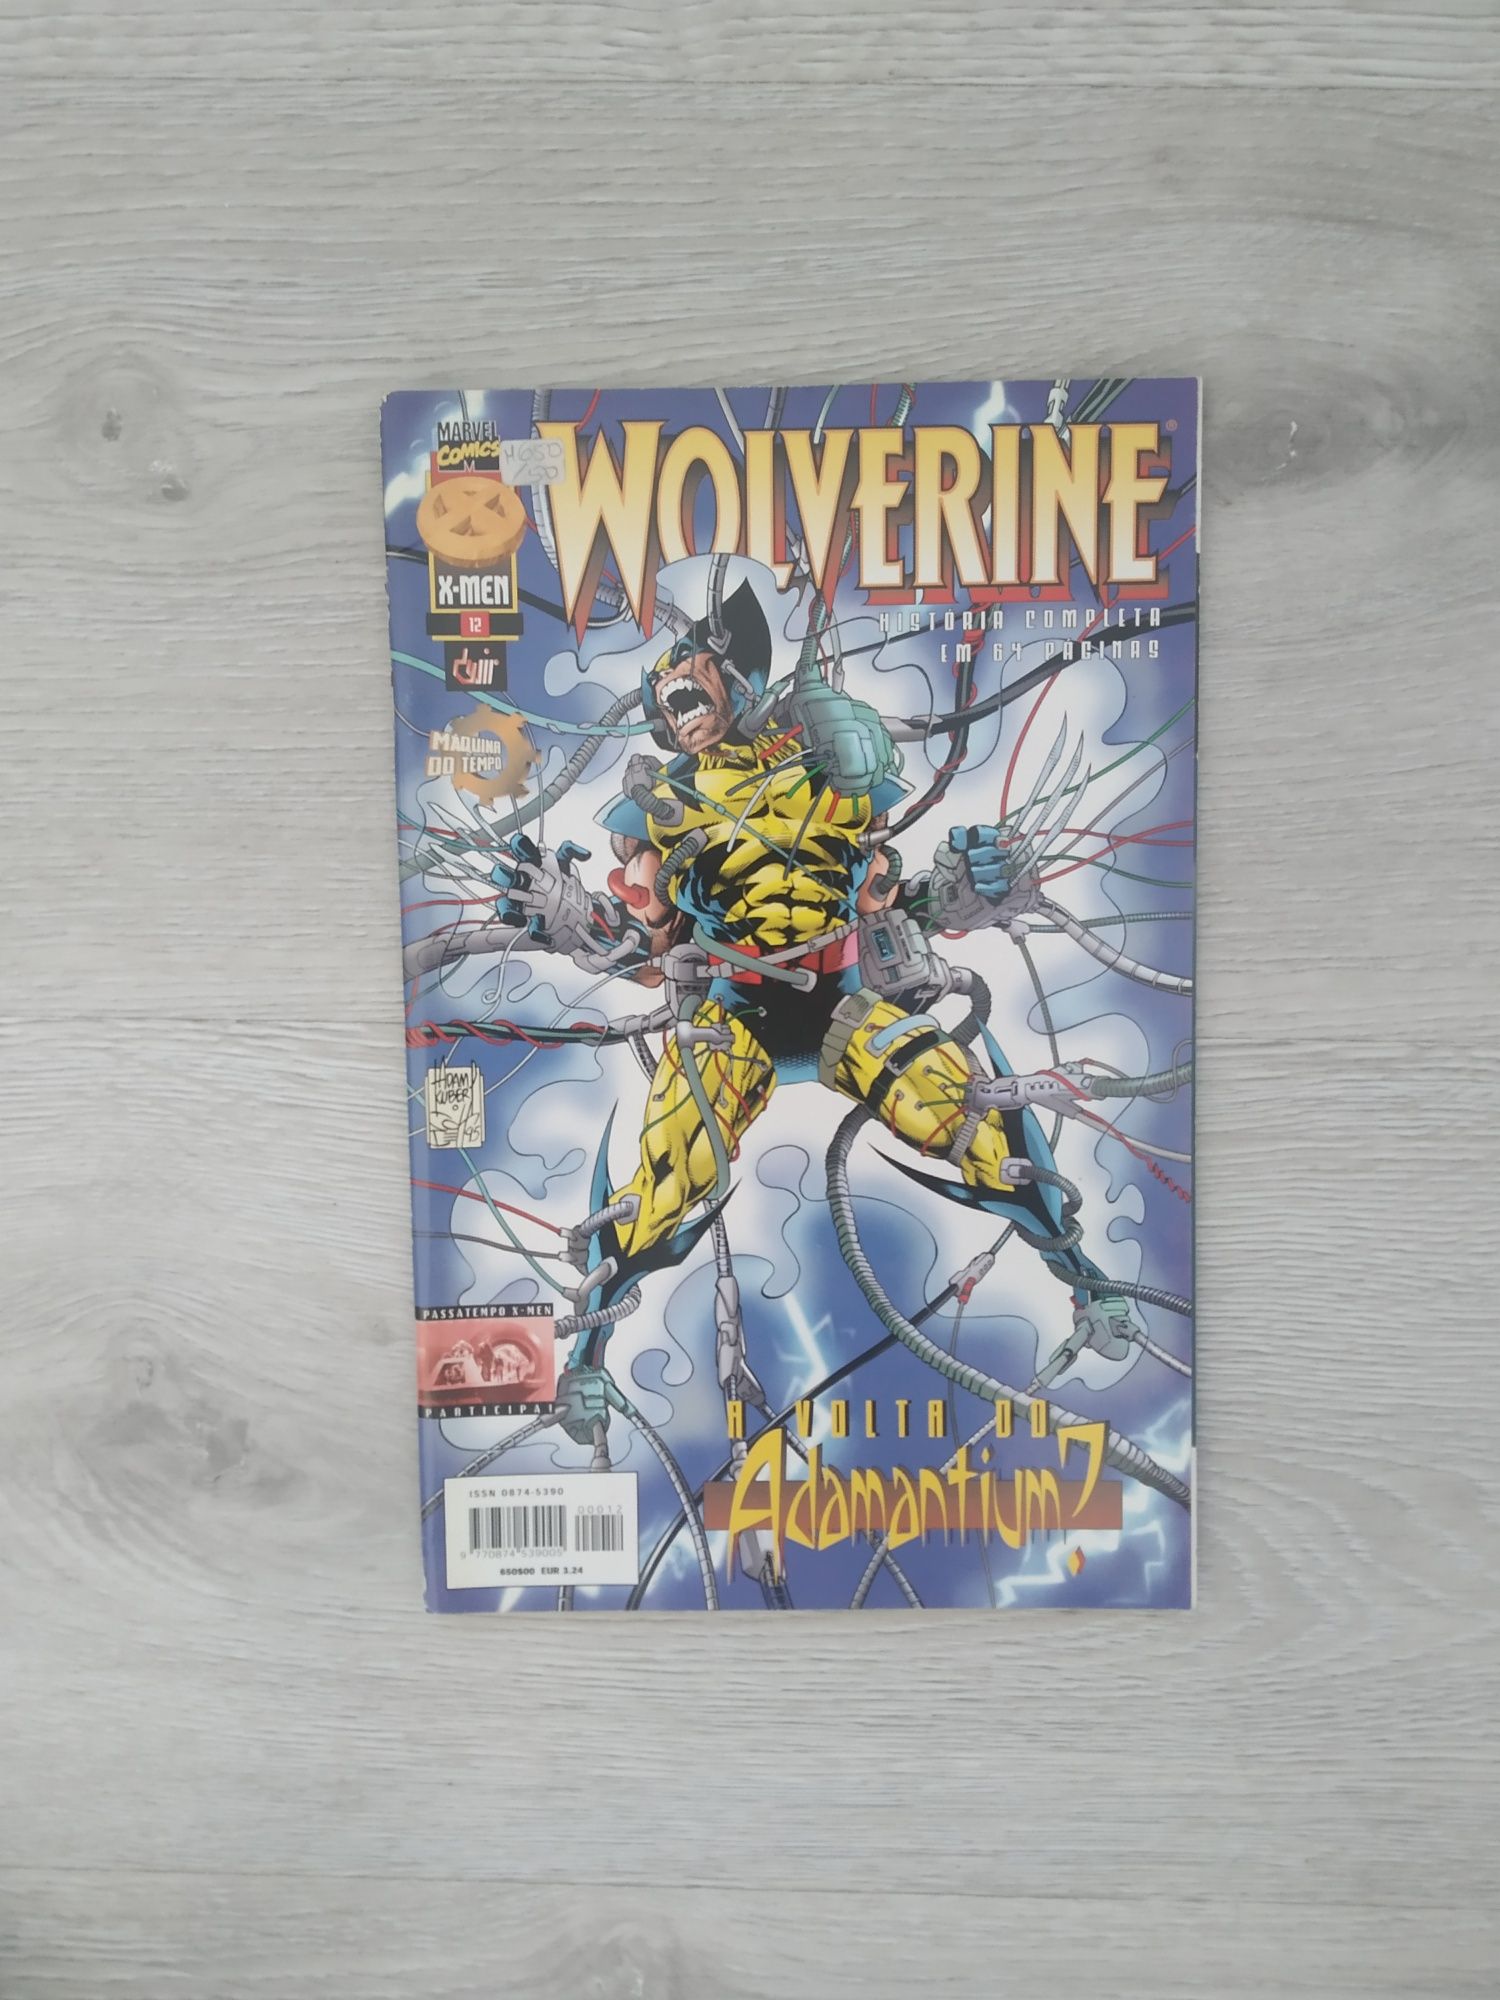 Lote 7 bandas desenhadas "Wolverine"